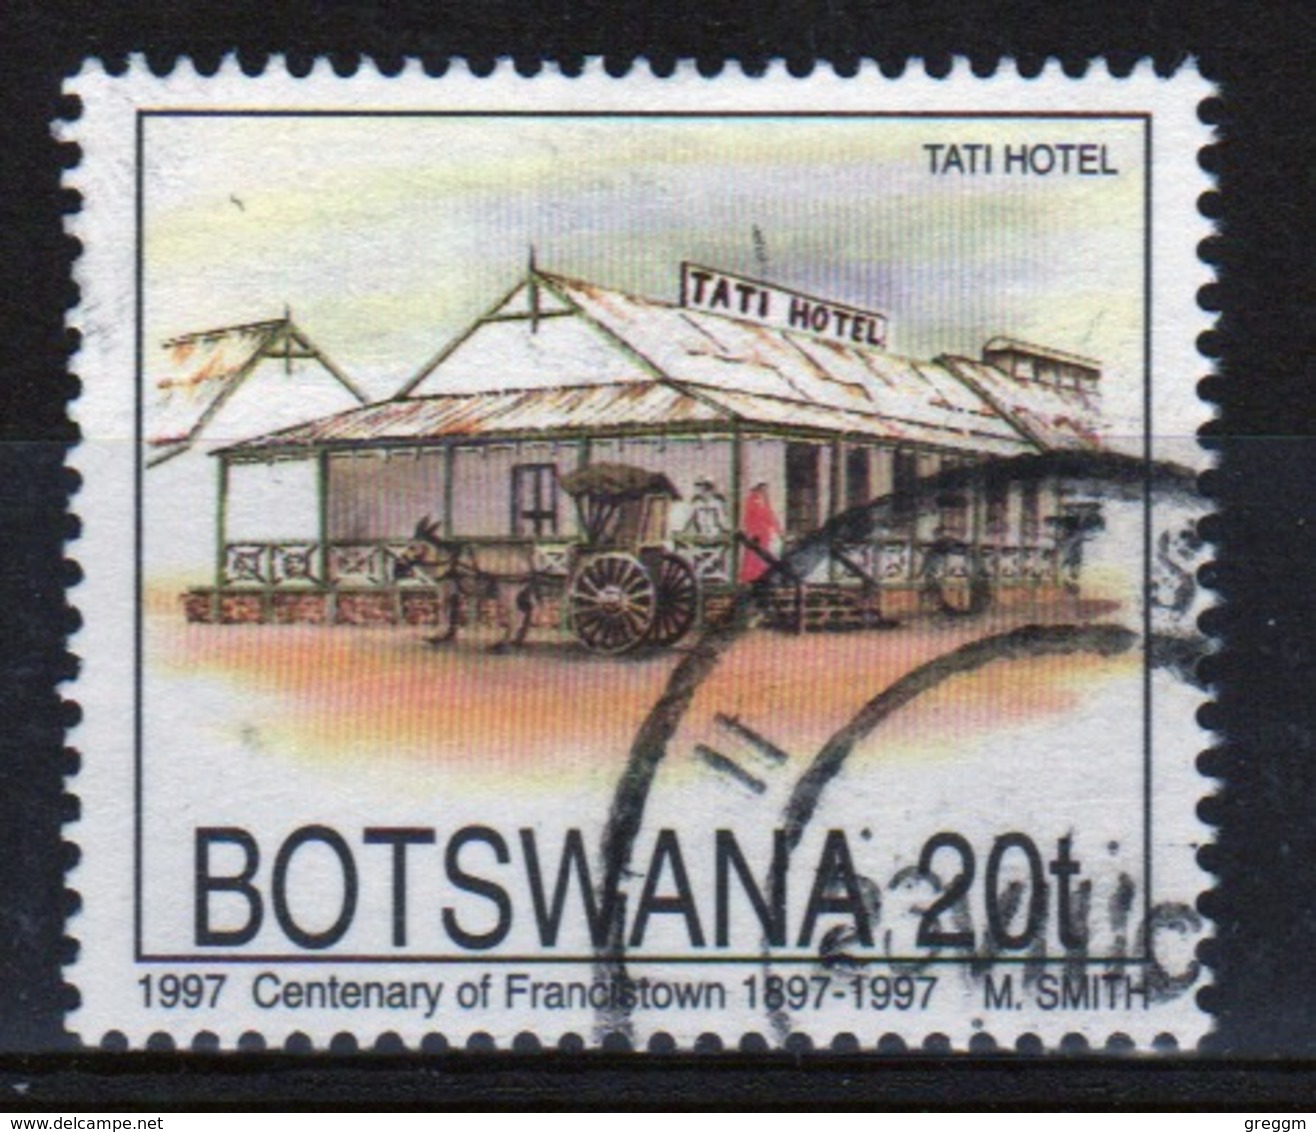 Botswana 1997 Single 20t Commemorative Stamp From The Francistown Centenary Set. - Botswana (1966-...)